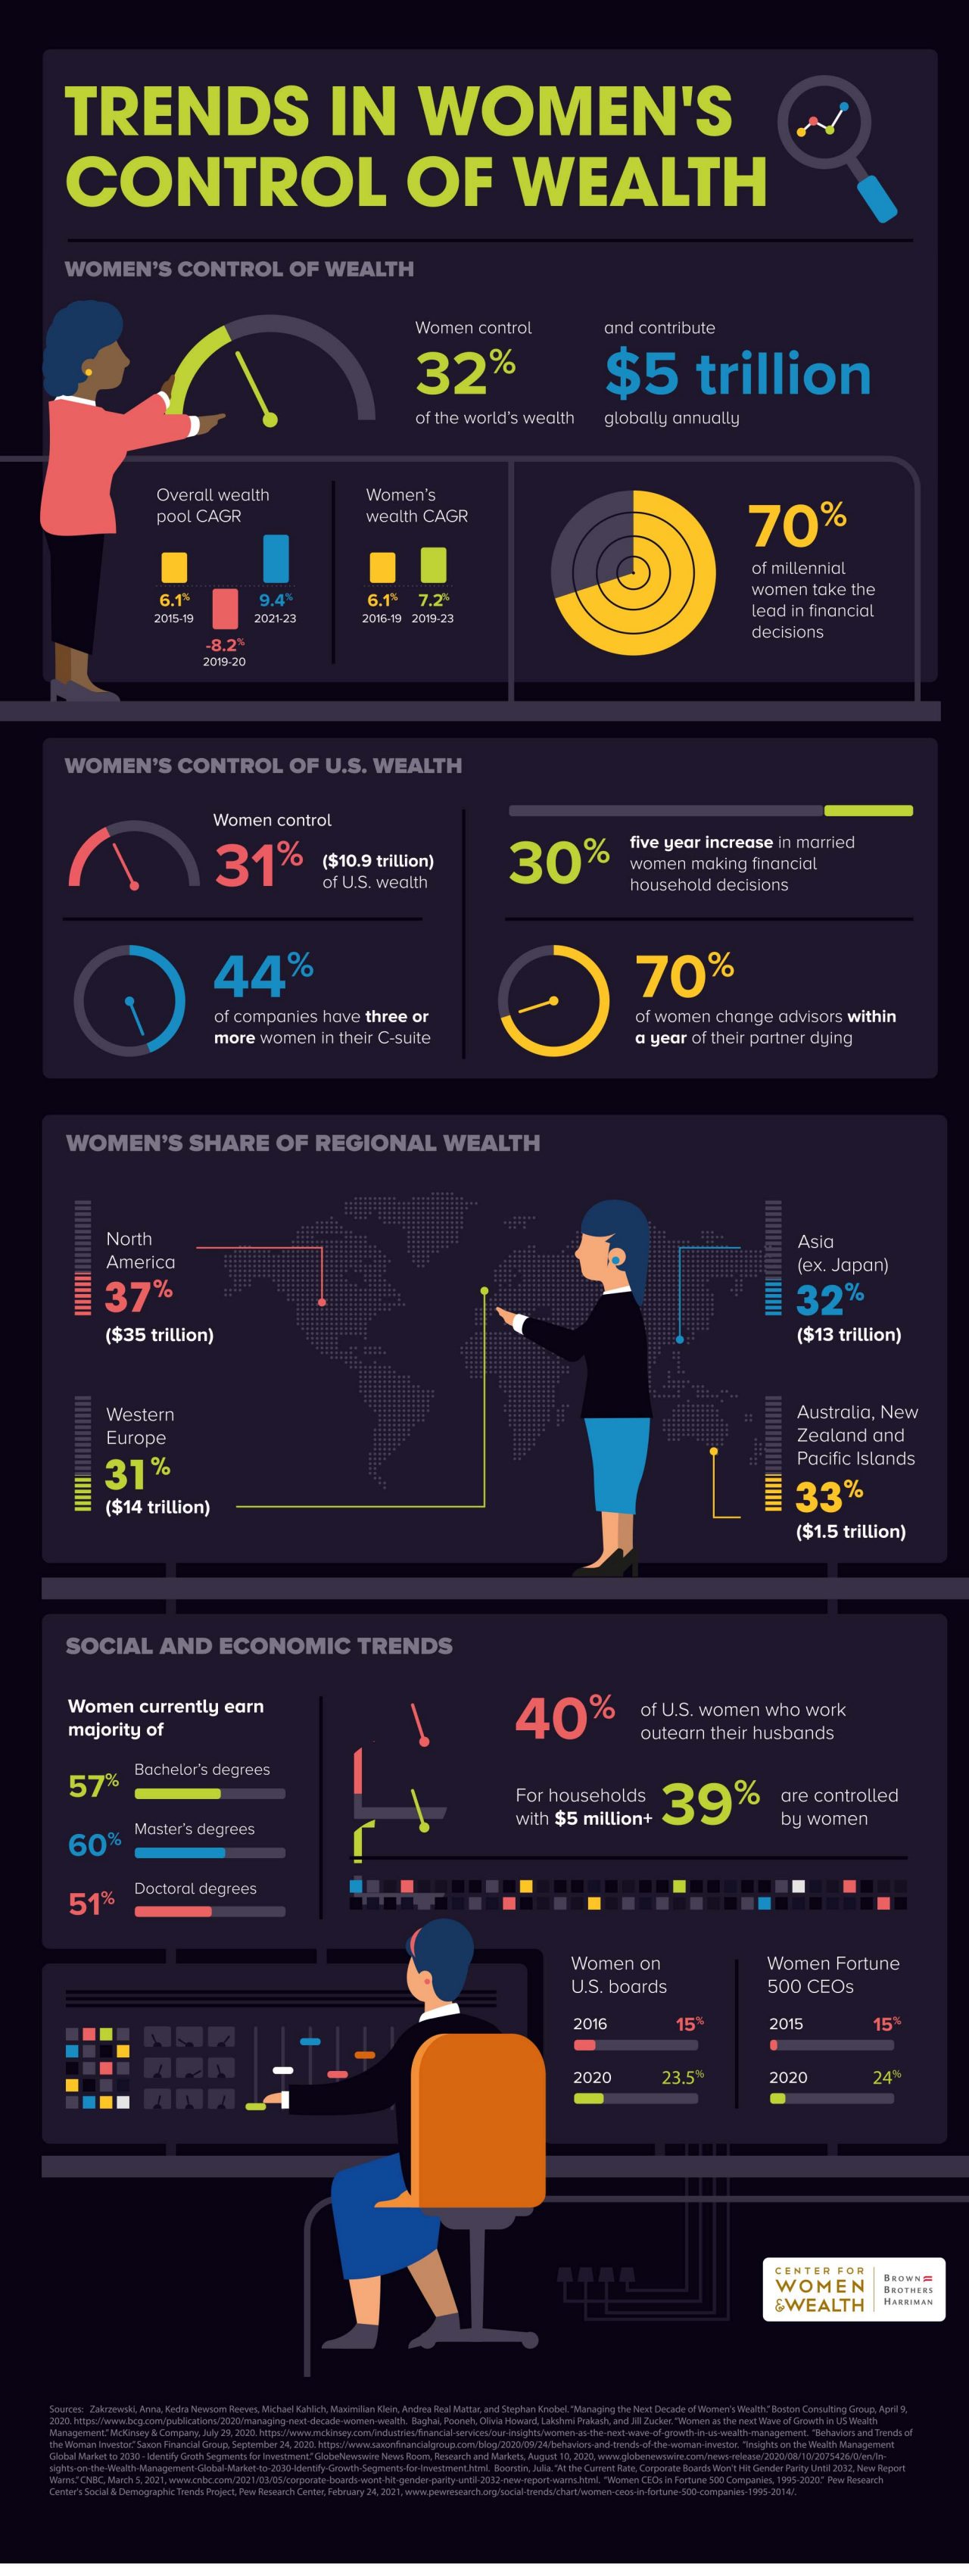 Women's control of wealth, women's control of U.S. wealth, women's share of regional wealth